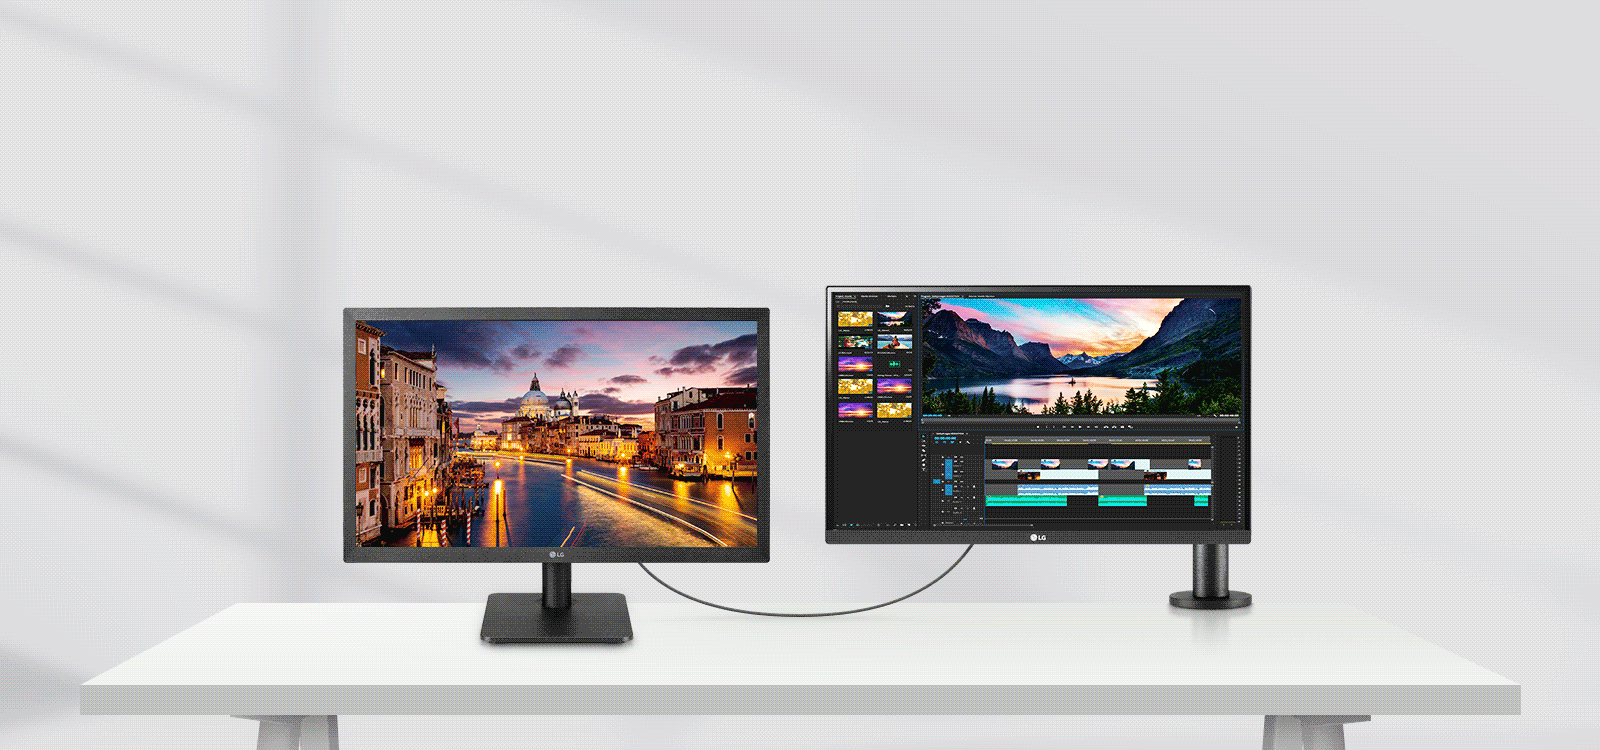 mnt-dualup-ergo-28mq780-02-1-more-screen-less-space-desktop